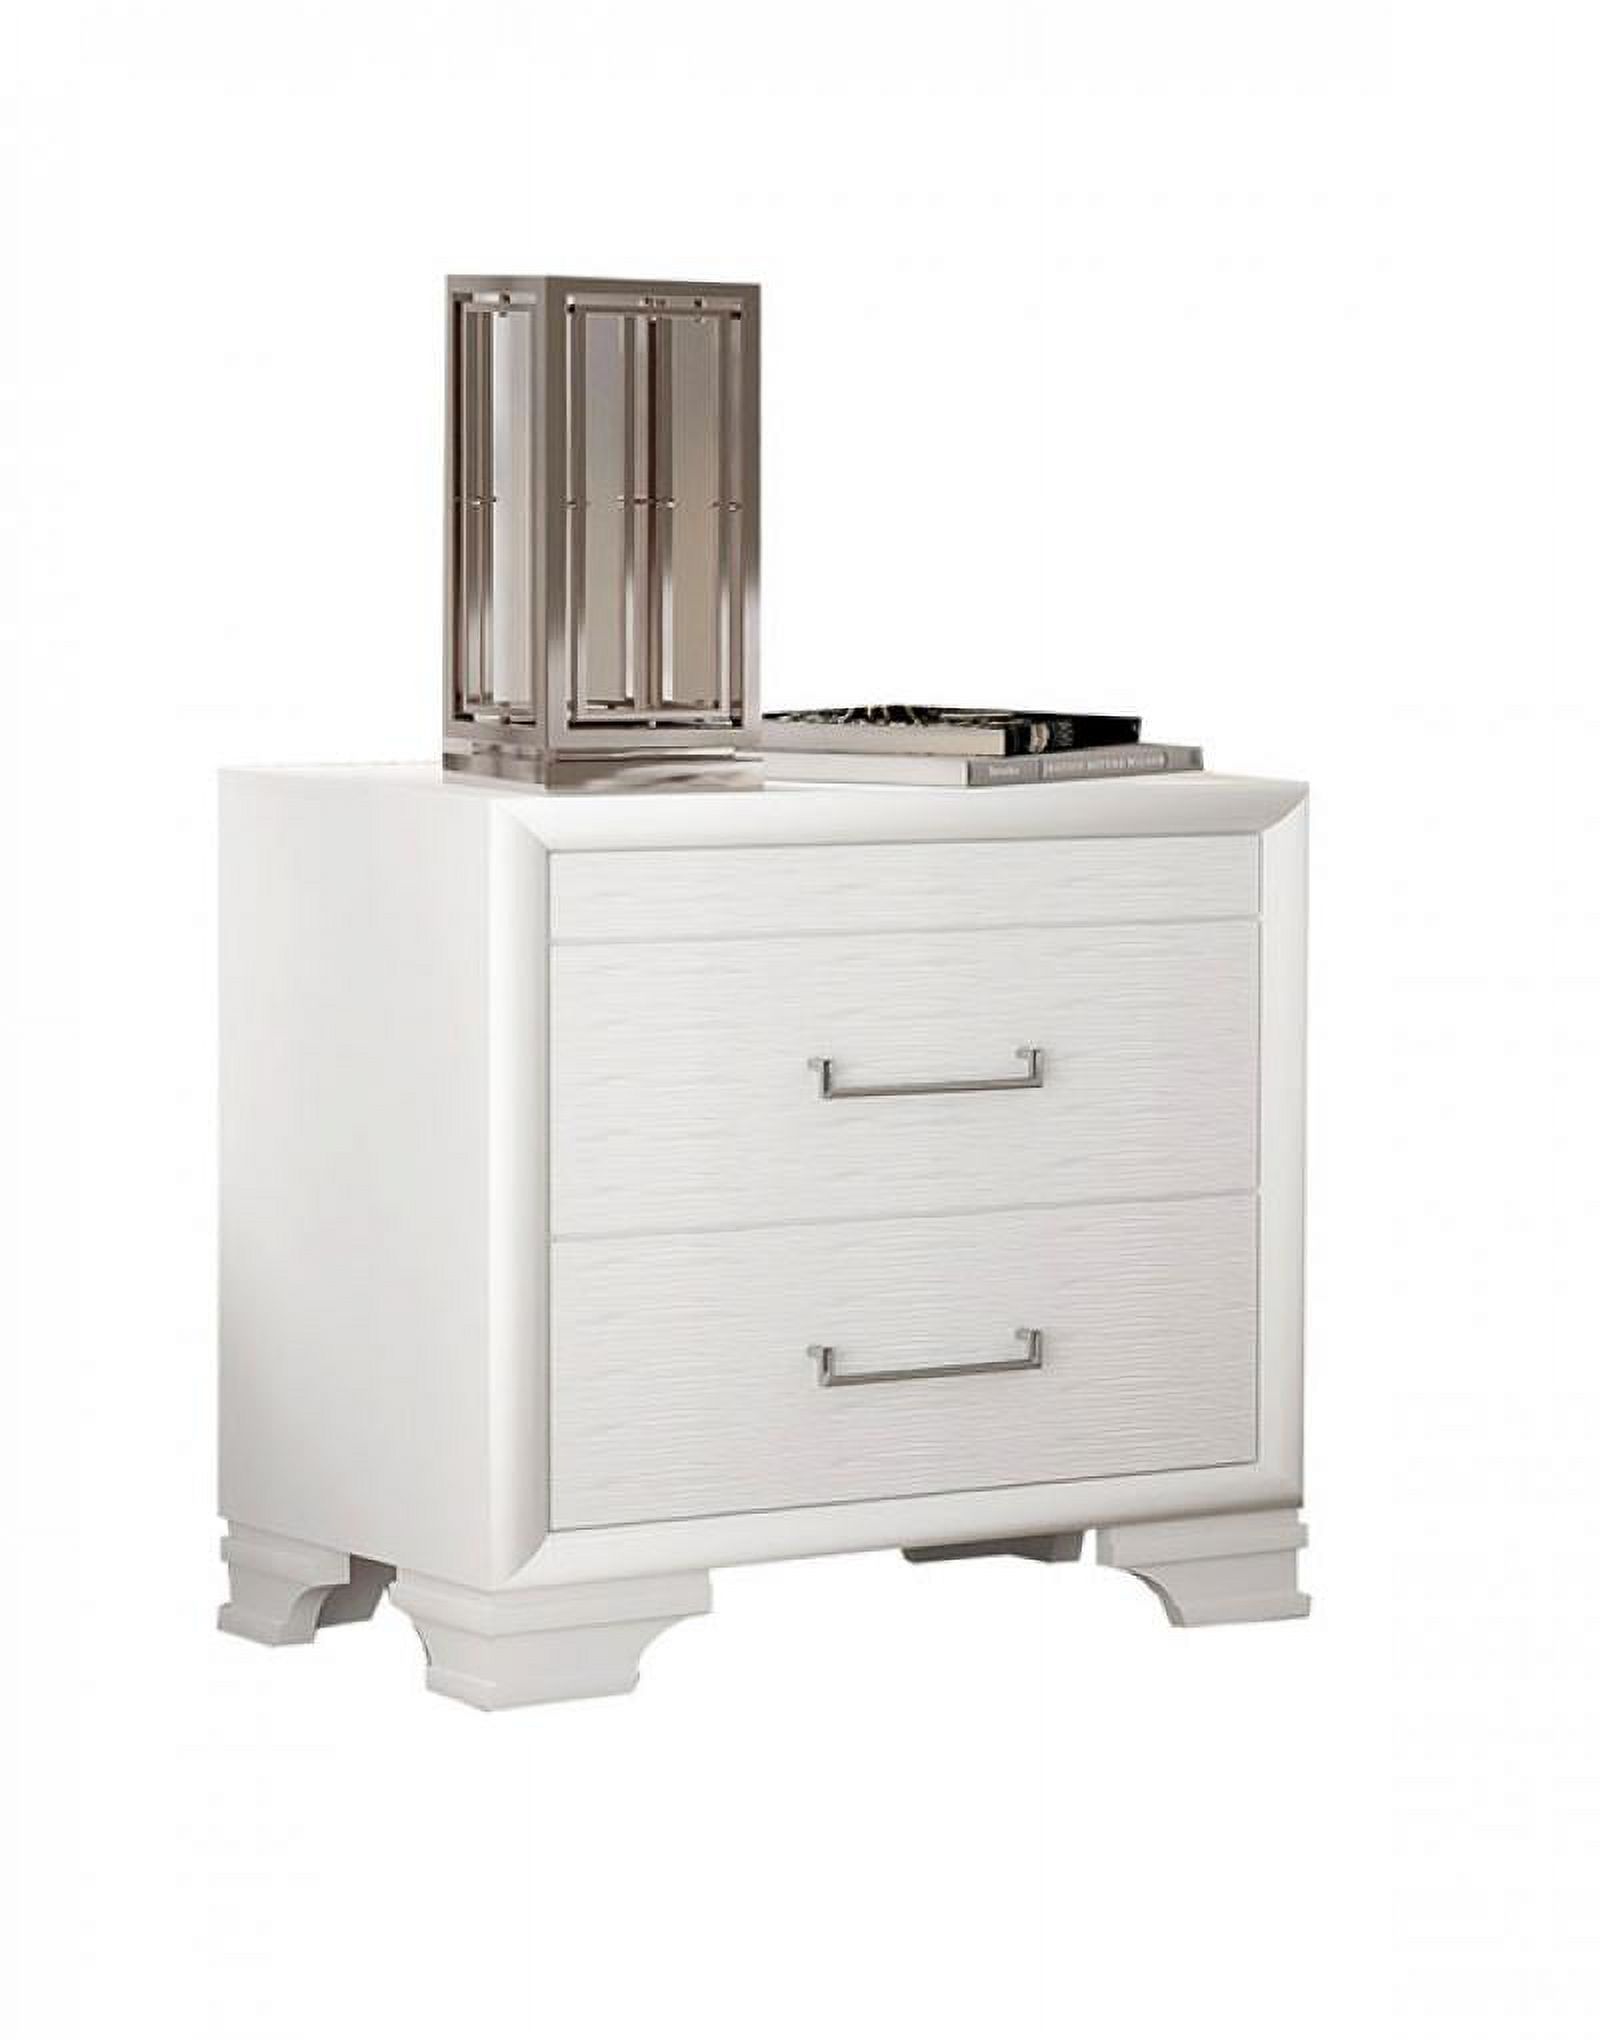 Storage Queen Bed & 2 Nightstands Glossy White Modern Global Furniture Jordyn - image 5 of 6